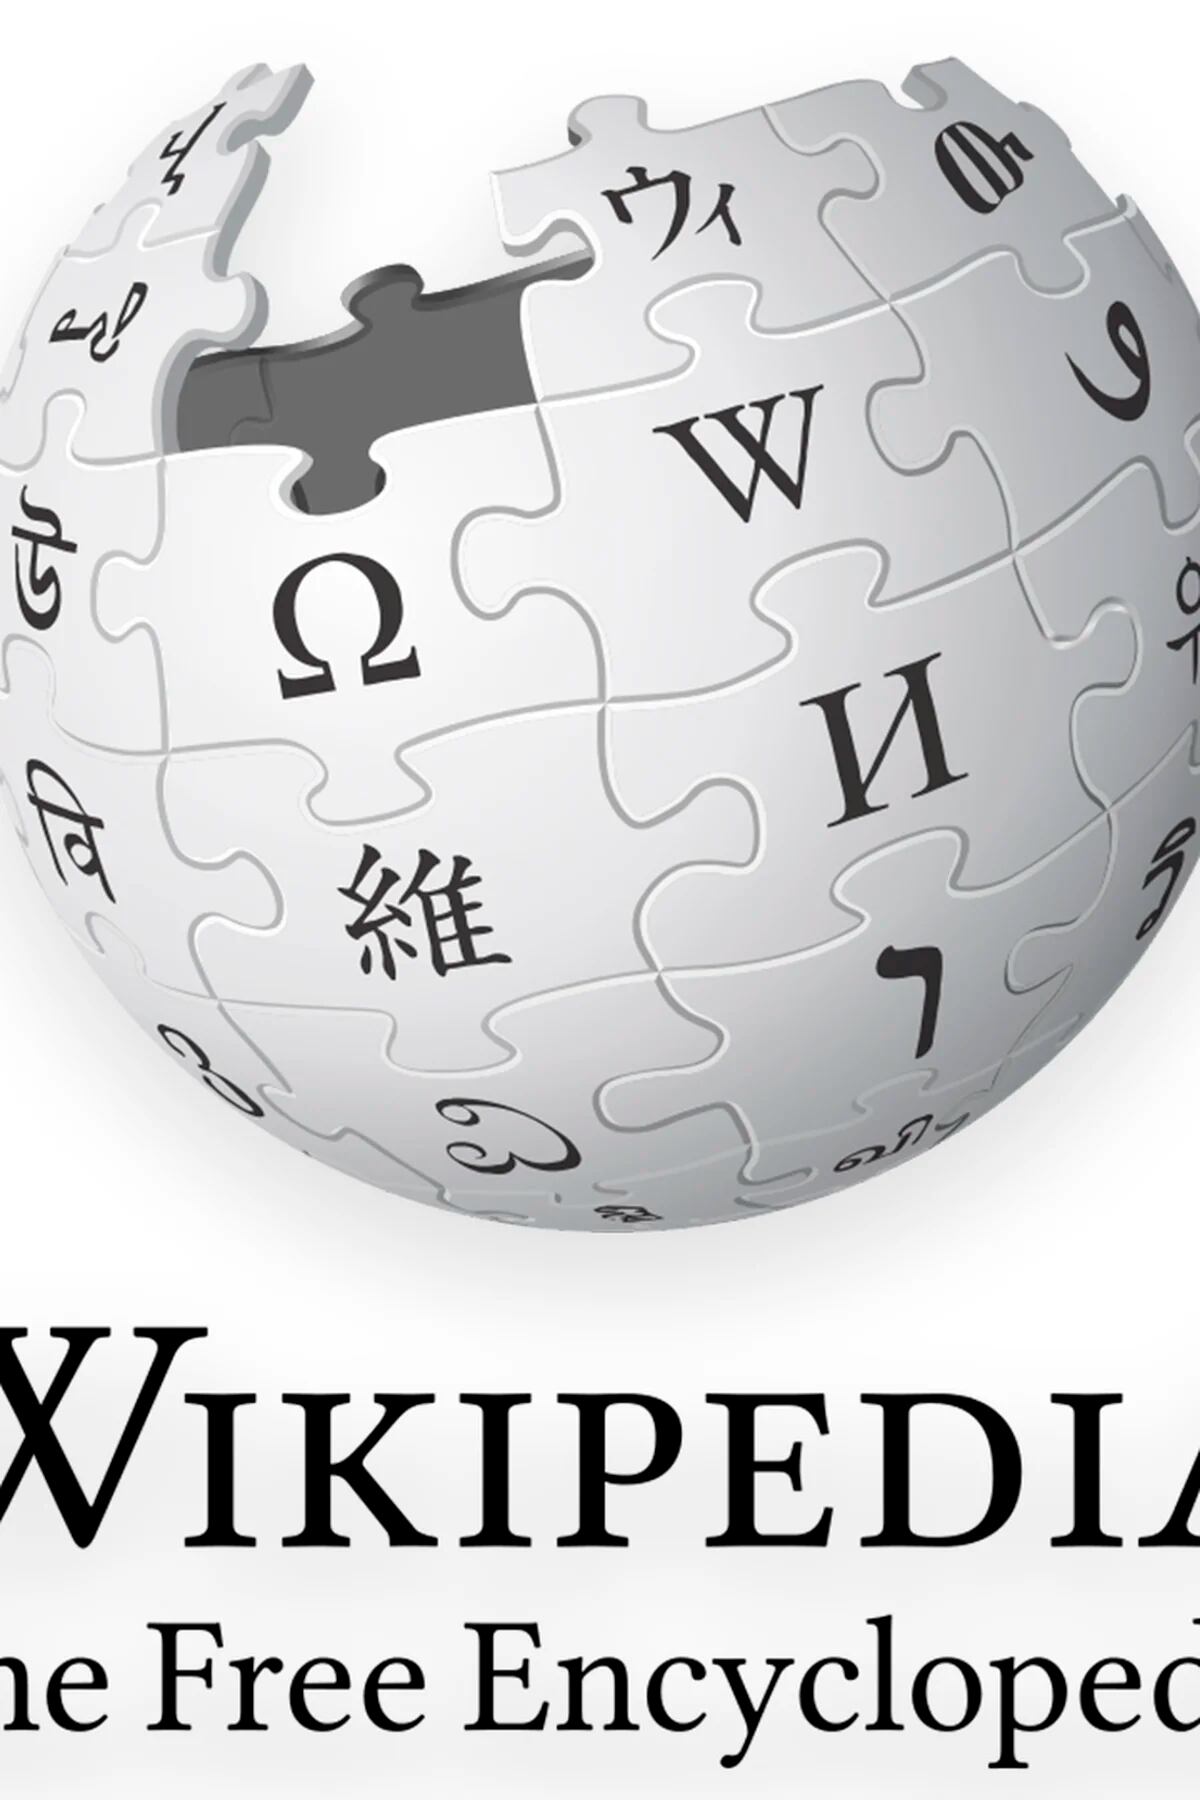 Aurus Komendant - Wikipedia, la enciclopedia libre